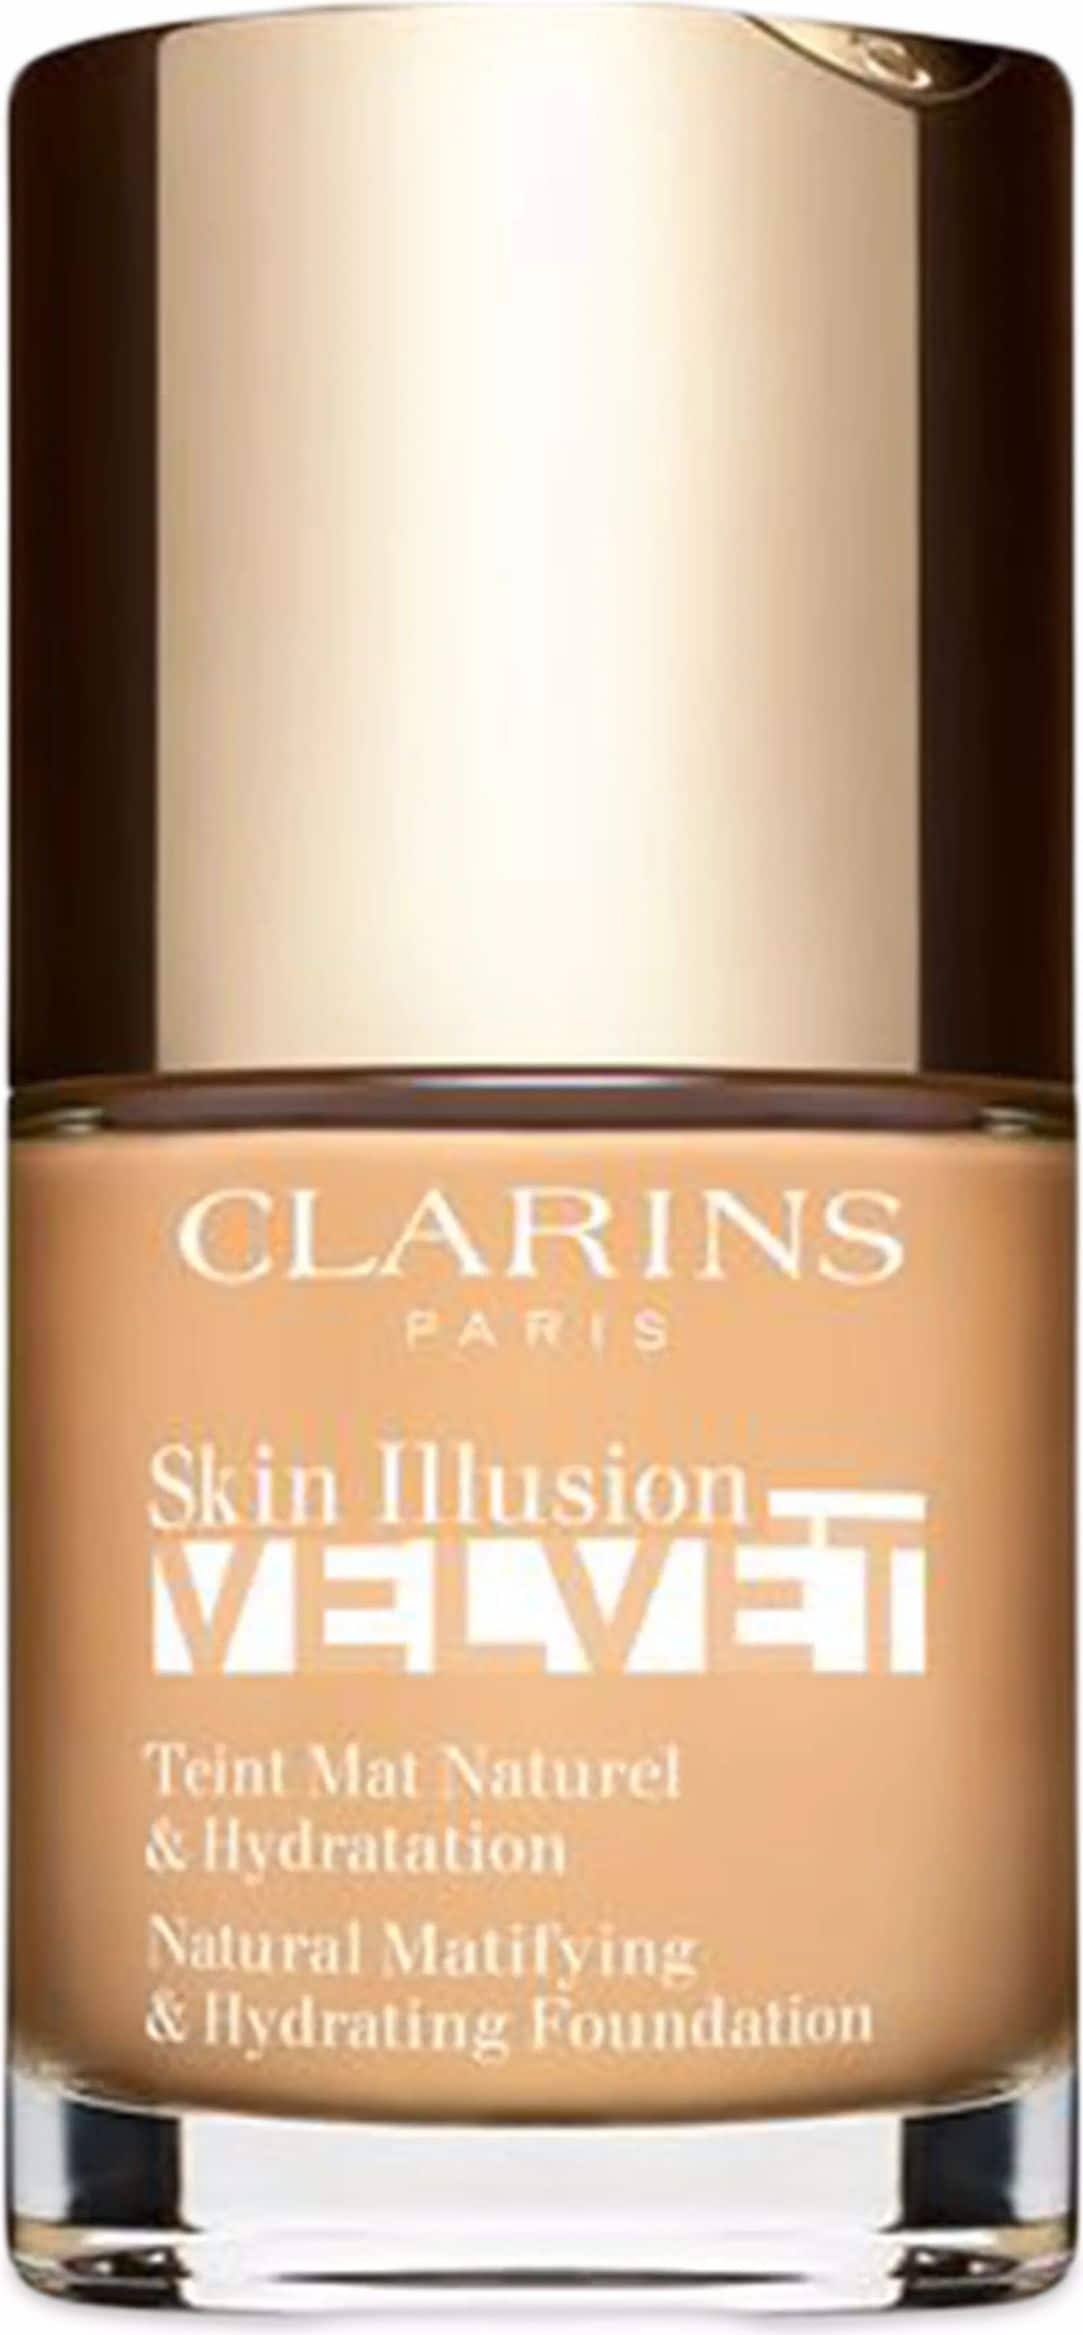 Clarins Skin Illusion Velvet Natural Matifying & Hydrating Foundation